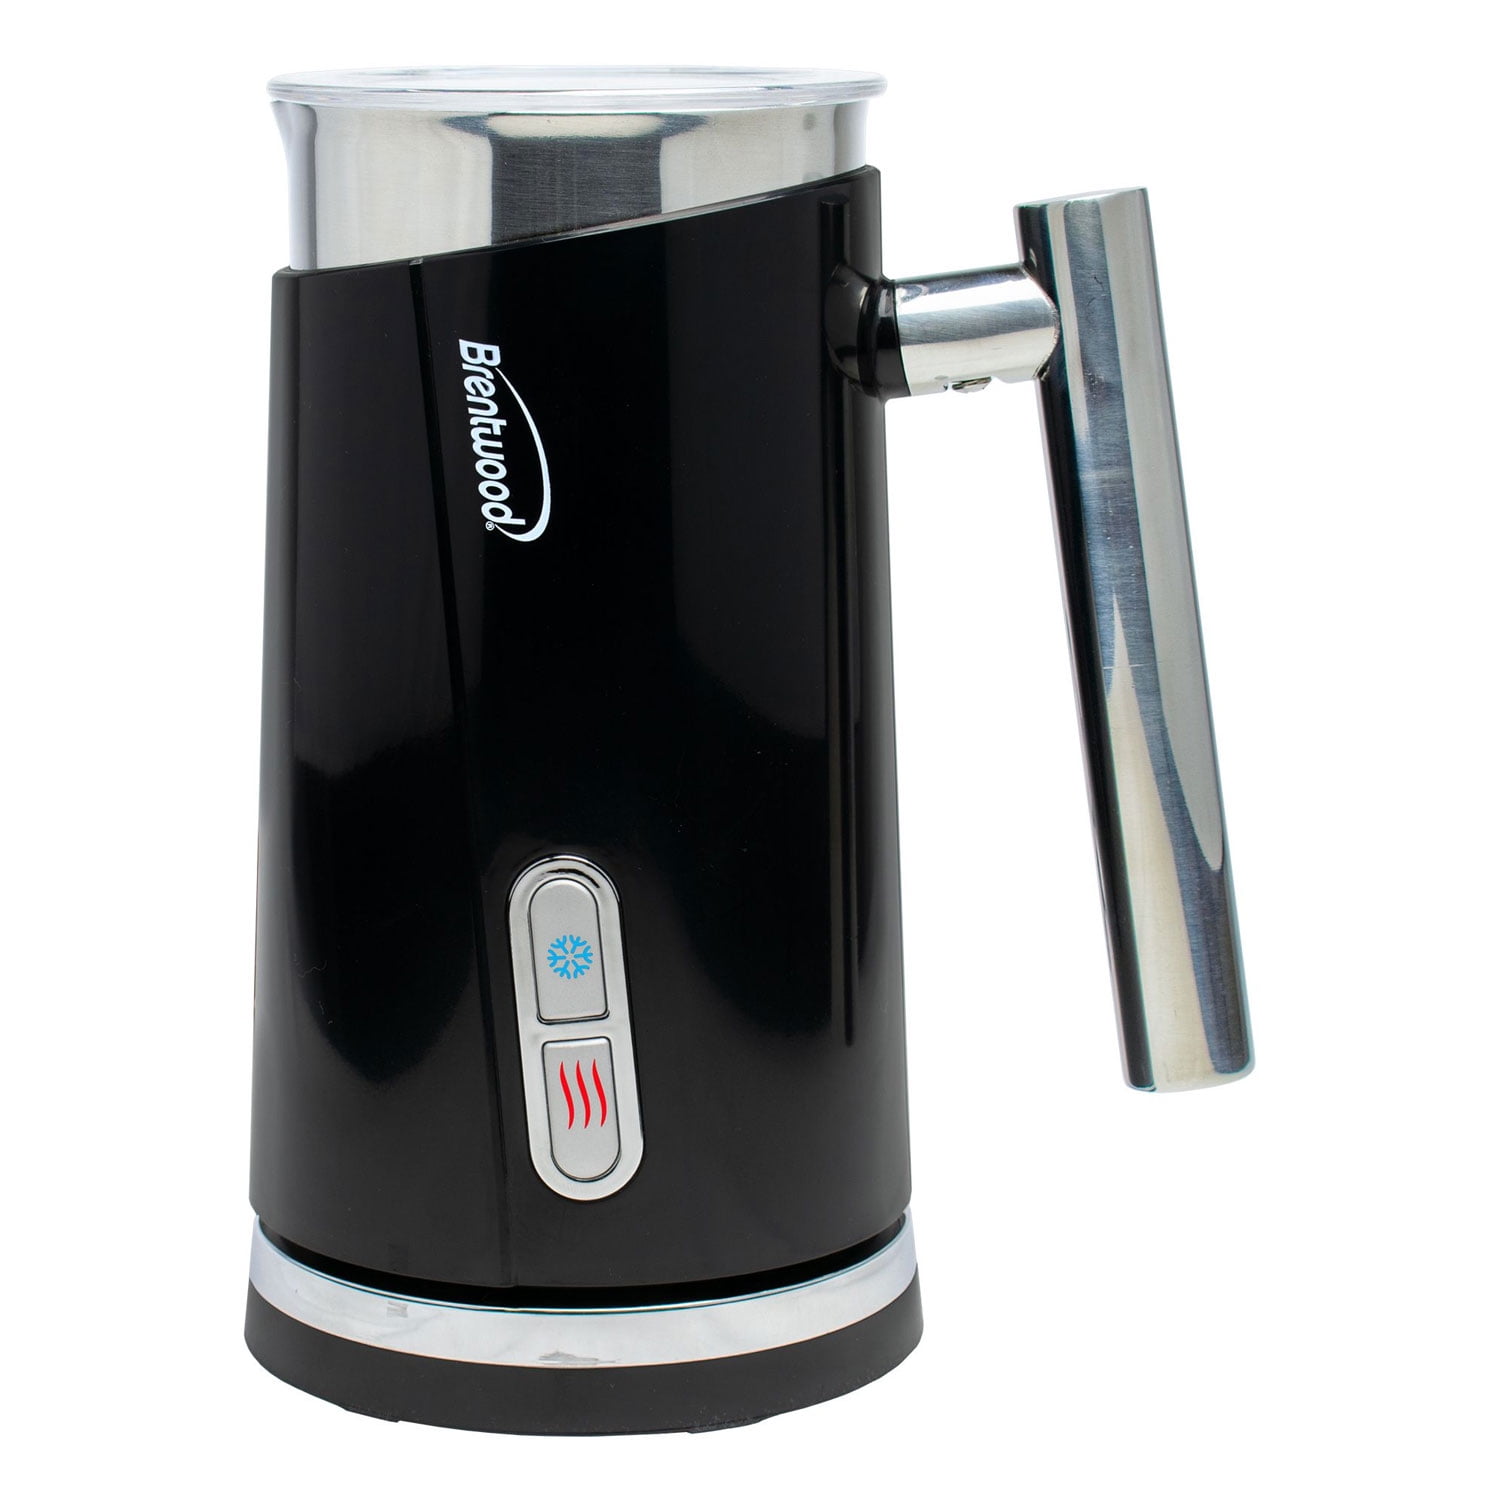  Rae Dunn Electric Milk Frother Steamer -Stylish Automatic Milk  Steamer and Frother, Milk Warmer, Hot and Cold Foam Maker for Coffee,  Latte, Cappuccino, Macchiato - 550 Watt (Black): Home & Kitchen